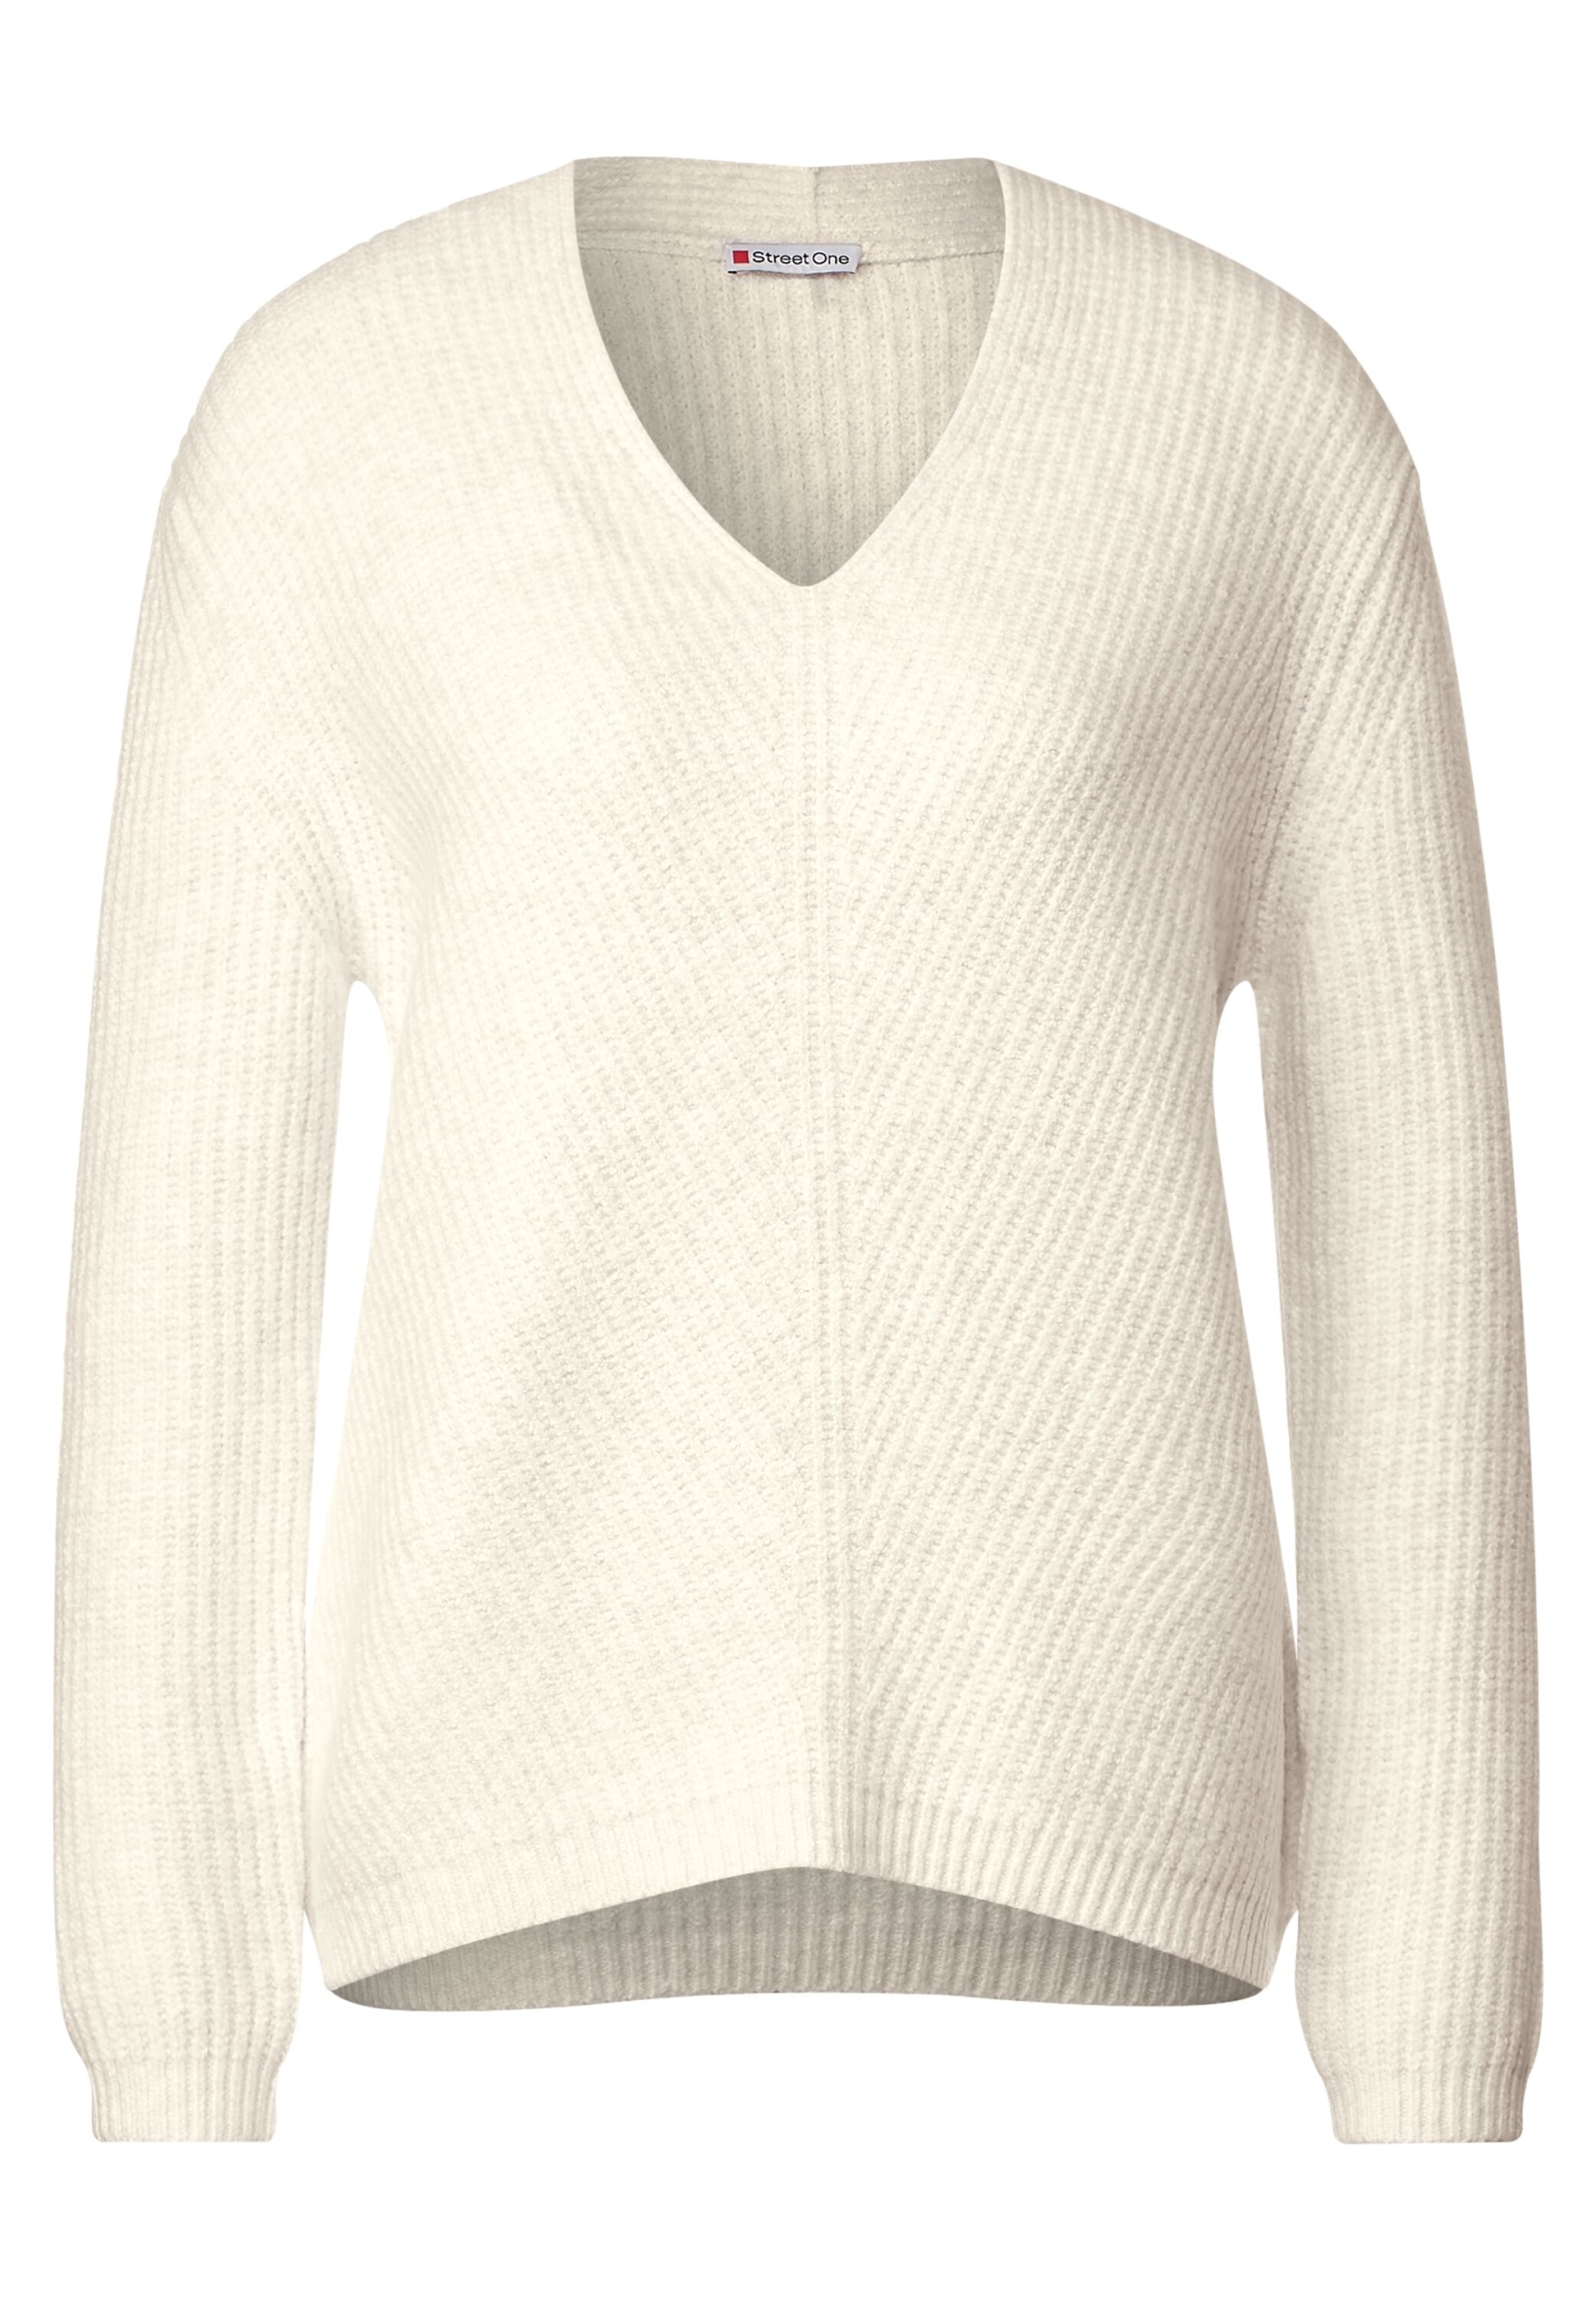 34 | cream | white A302538-14959-34 v-neck LTD | QR melange sweater